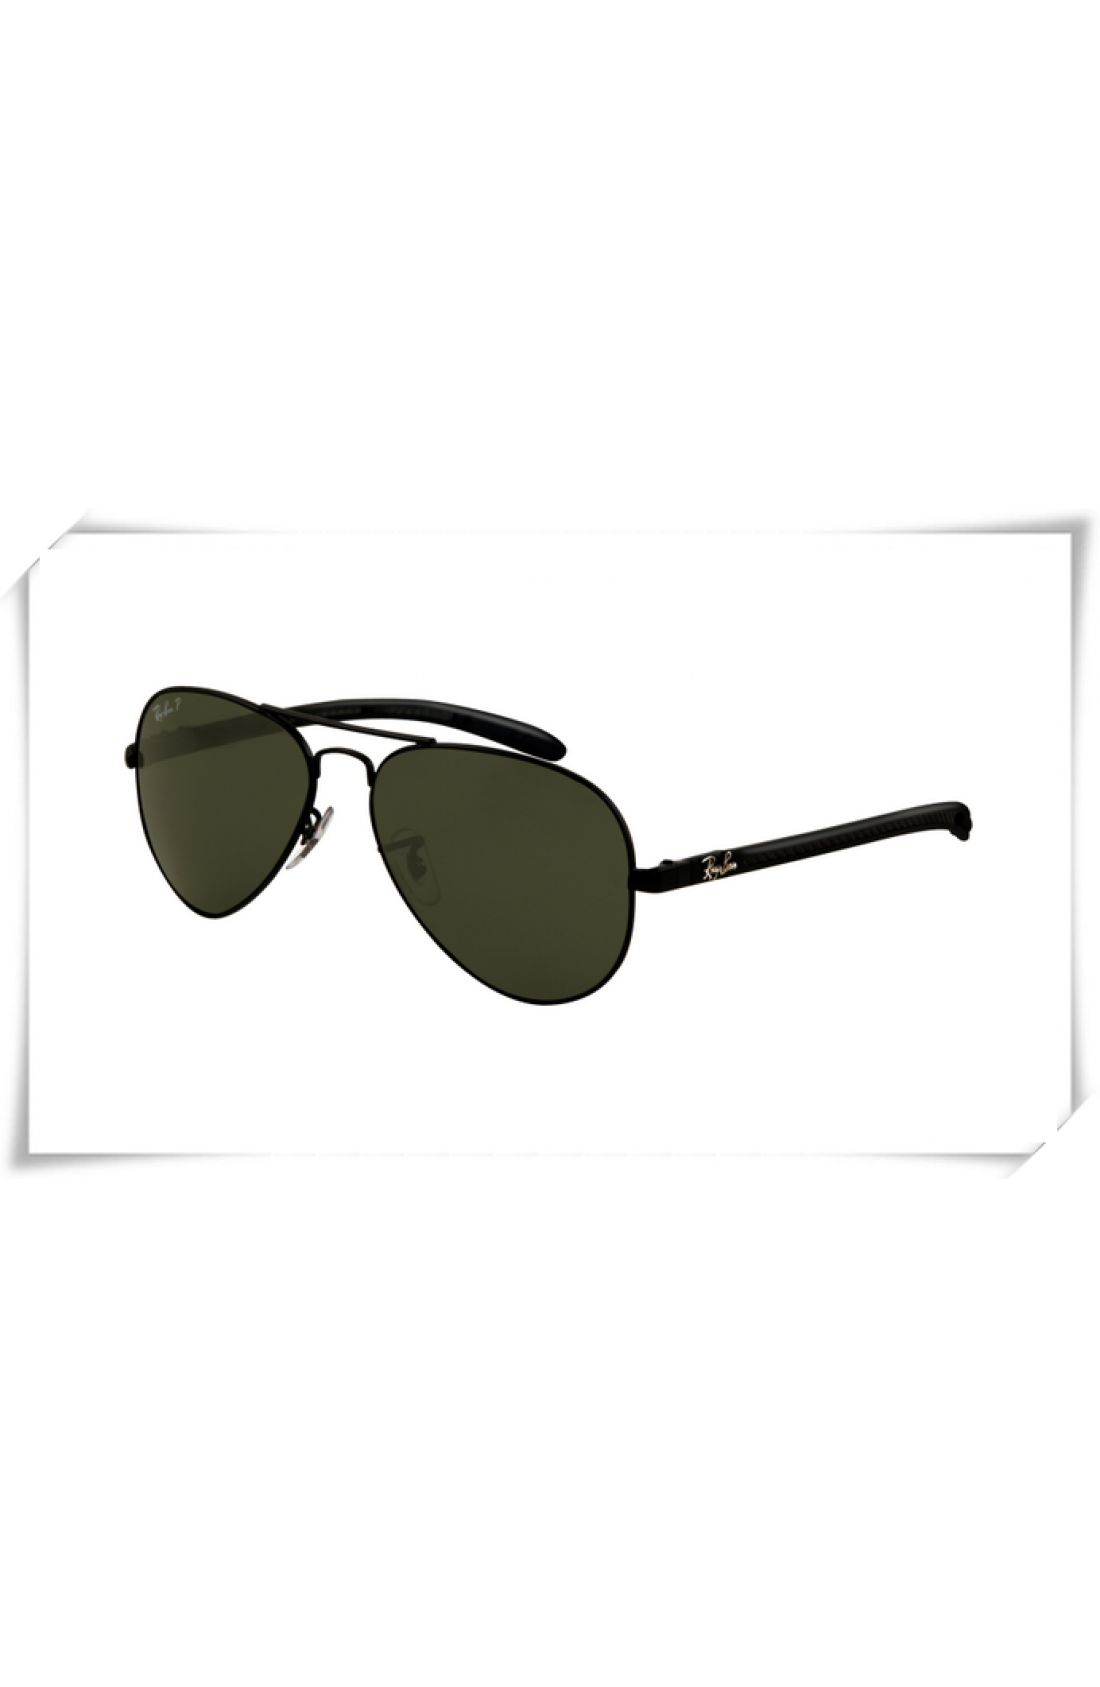 Cheap Fake Ray Ban Rb07 Aviator Tech Sunglasses Carbon Fibre Black Frame Classic Green Lens Outlet